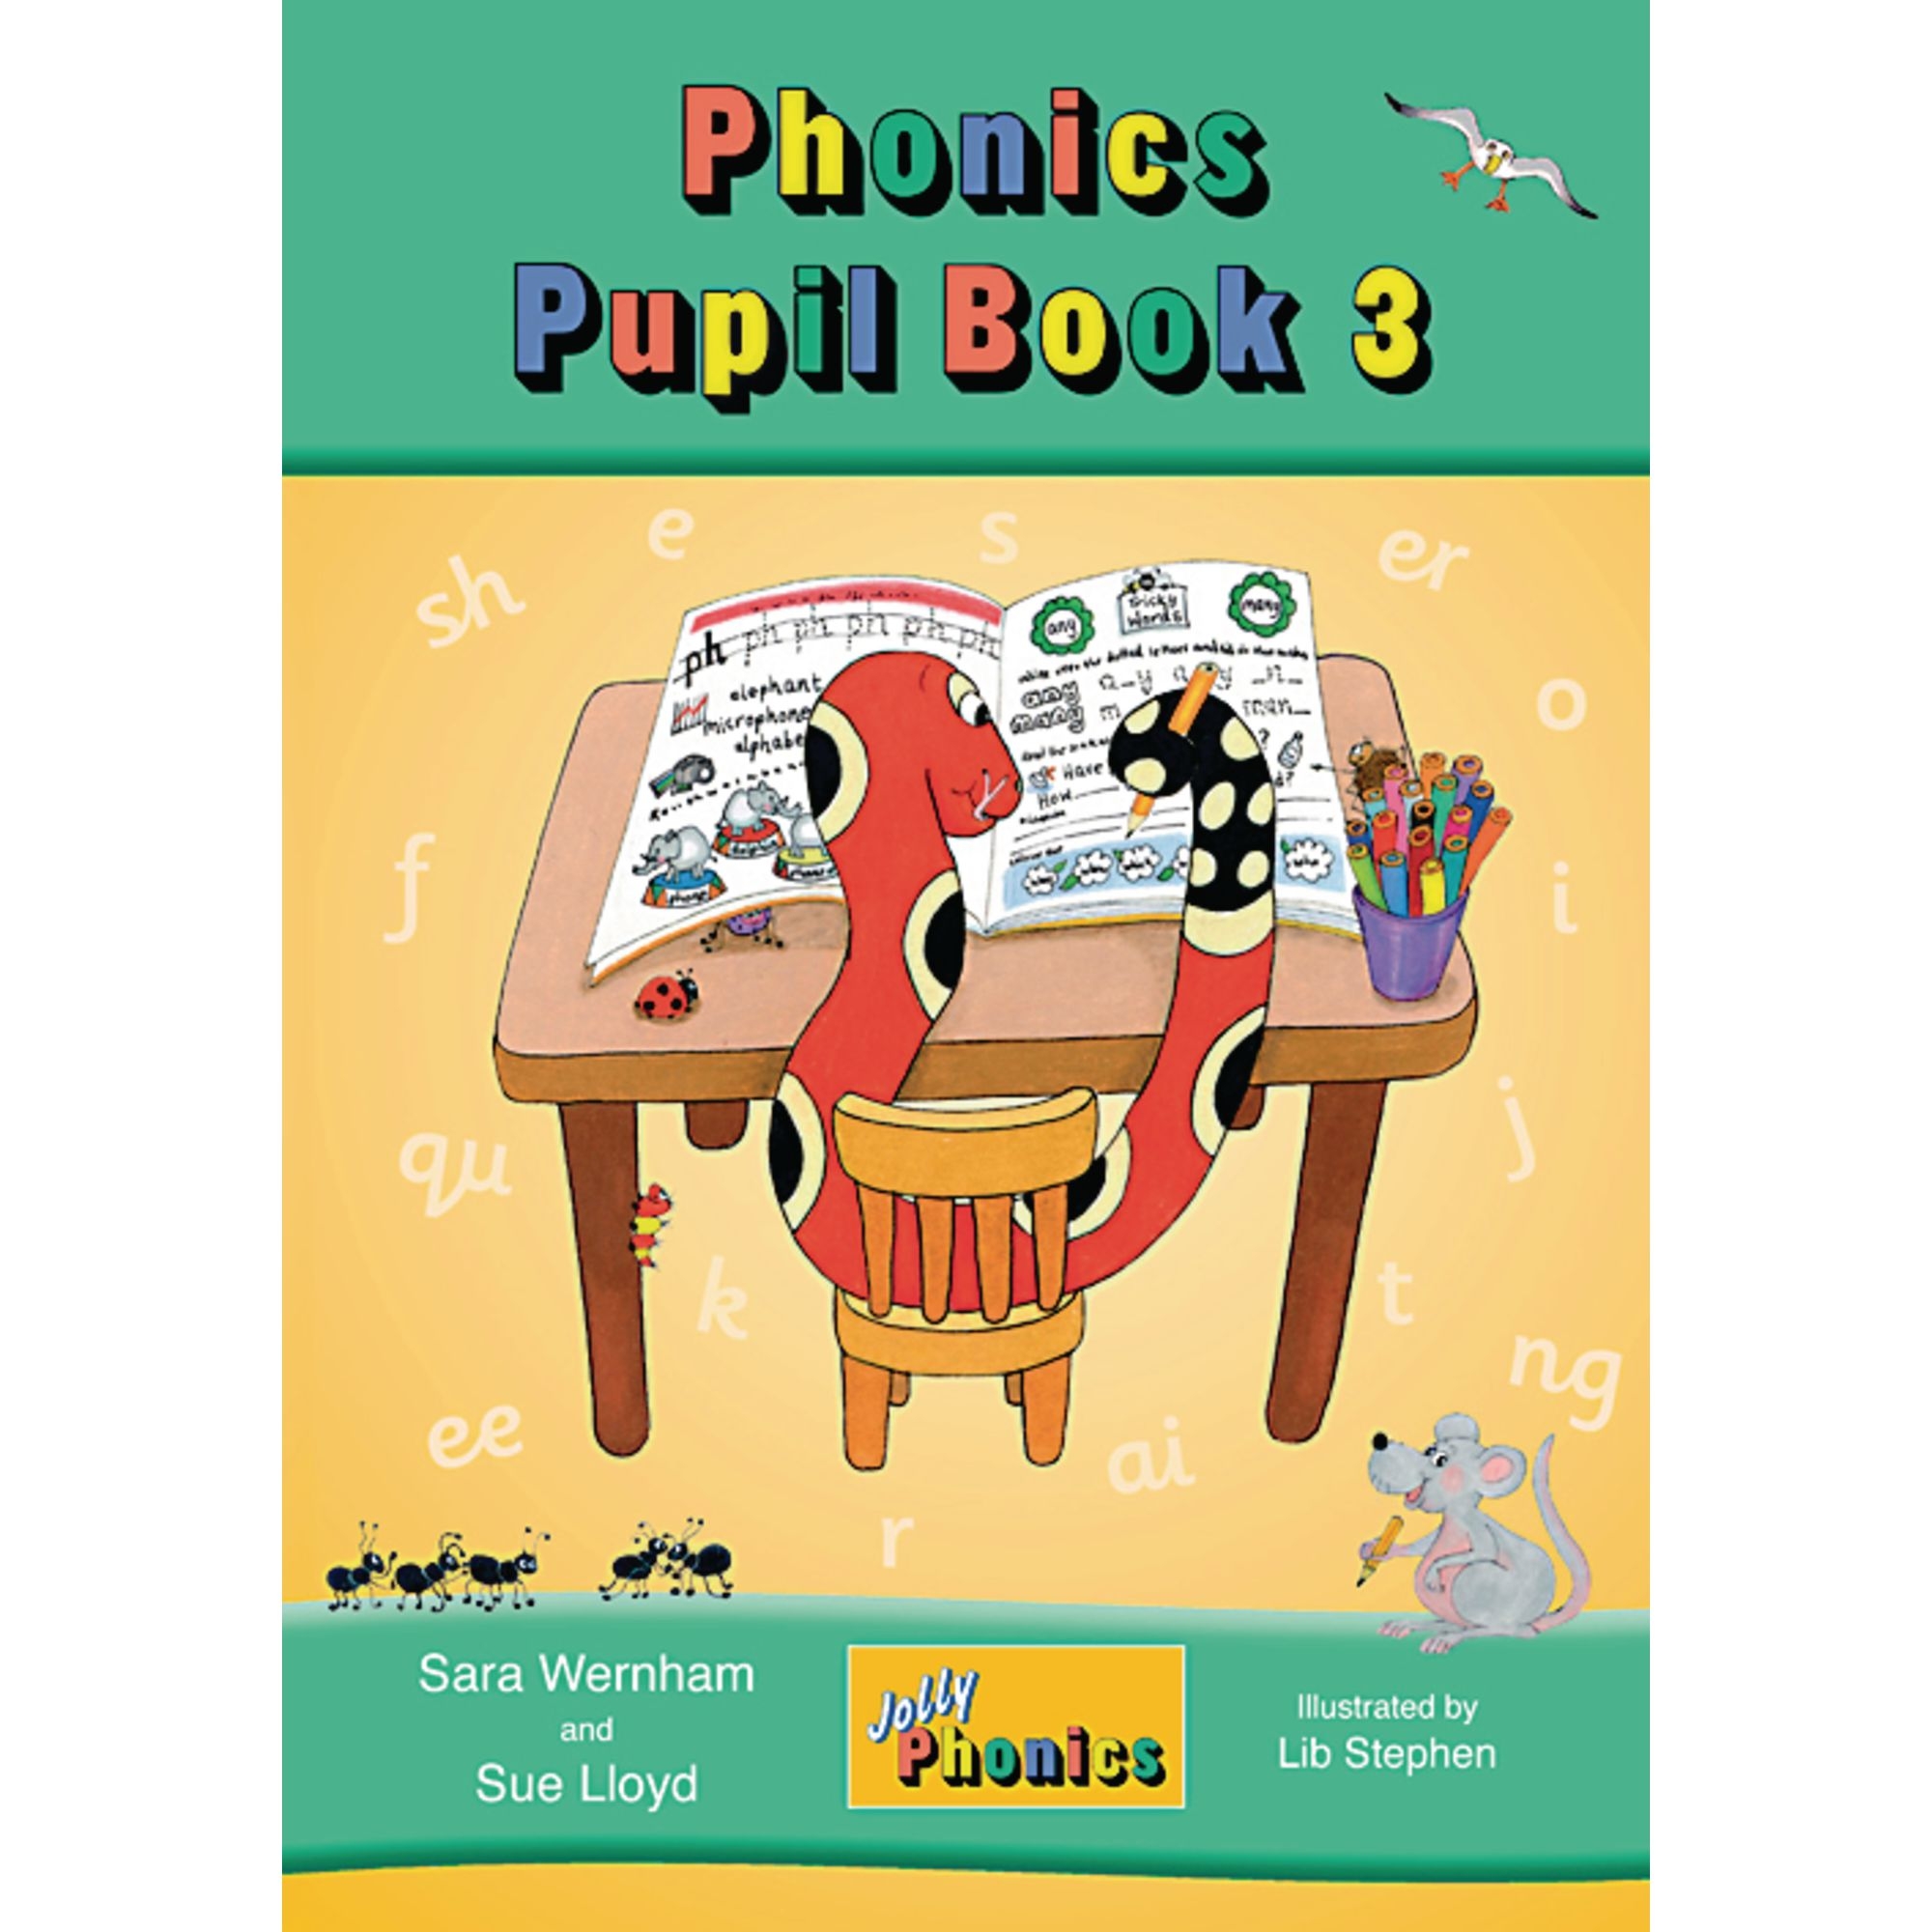 Jolly Phonics Pupil Book 3 - Colour